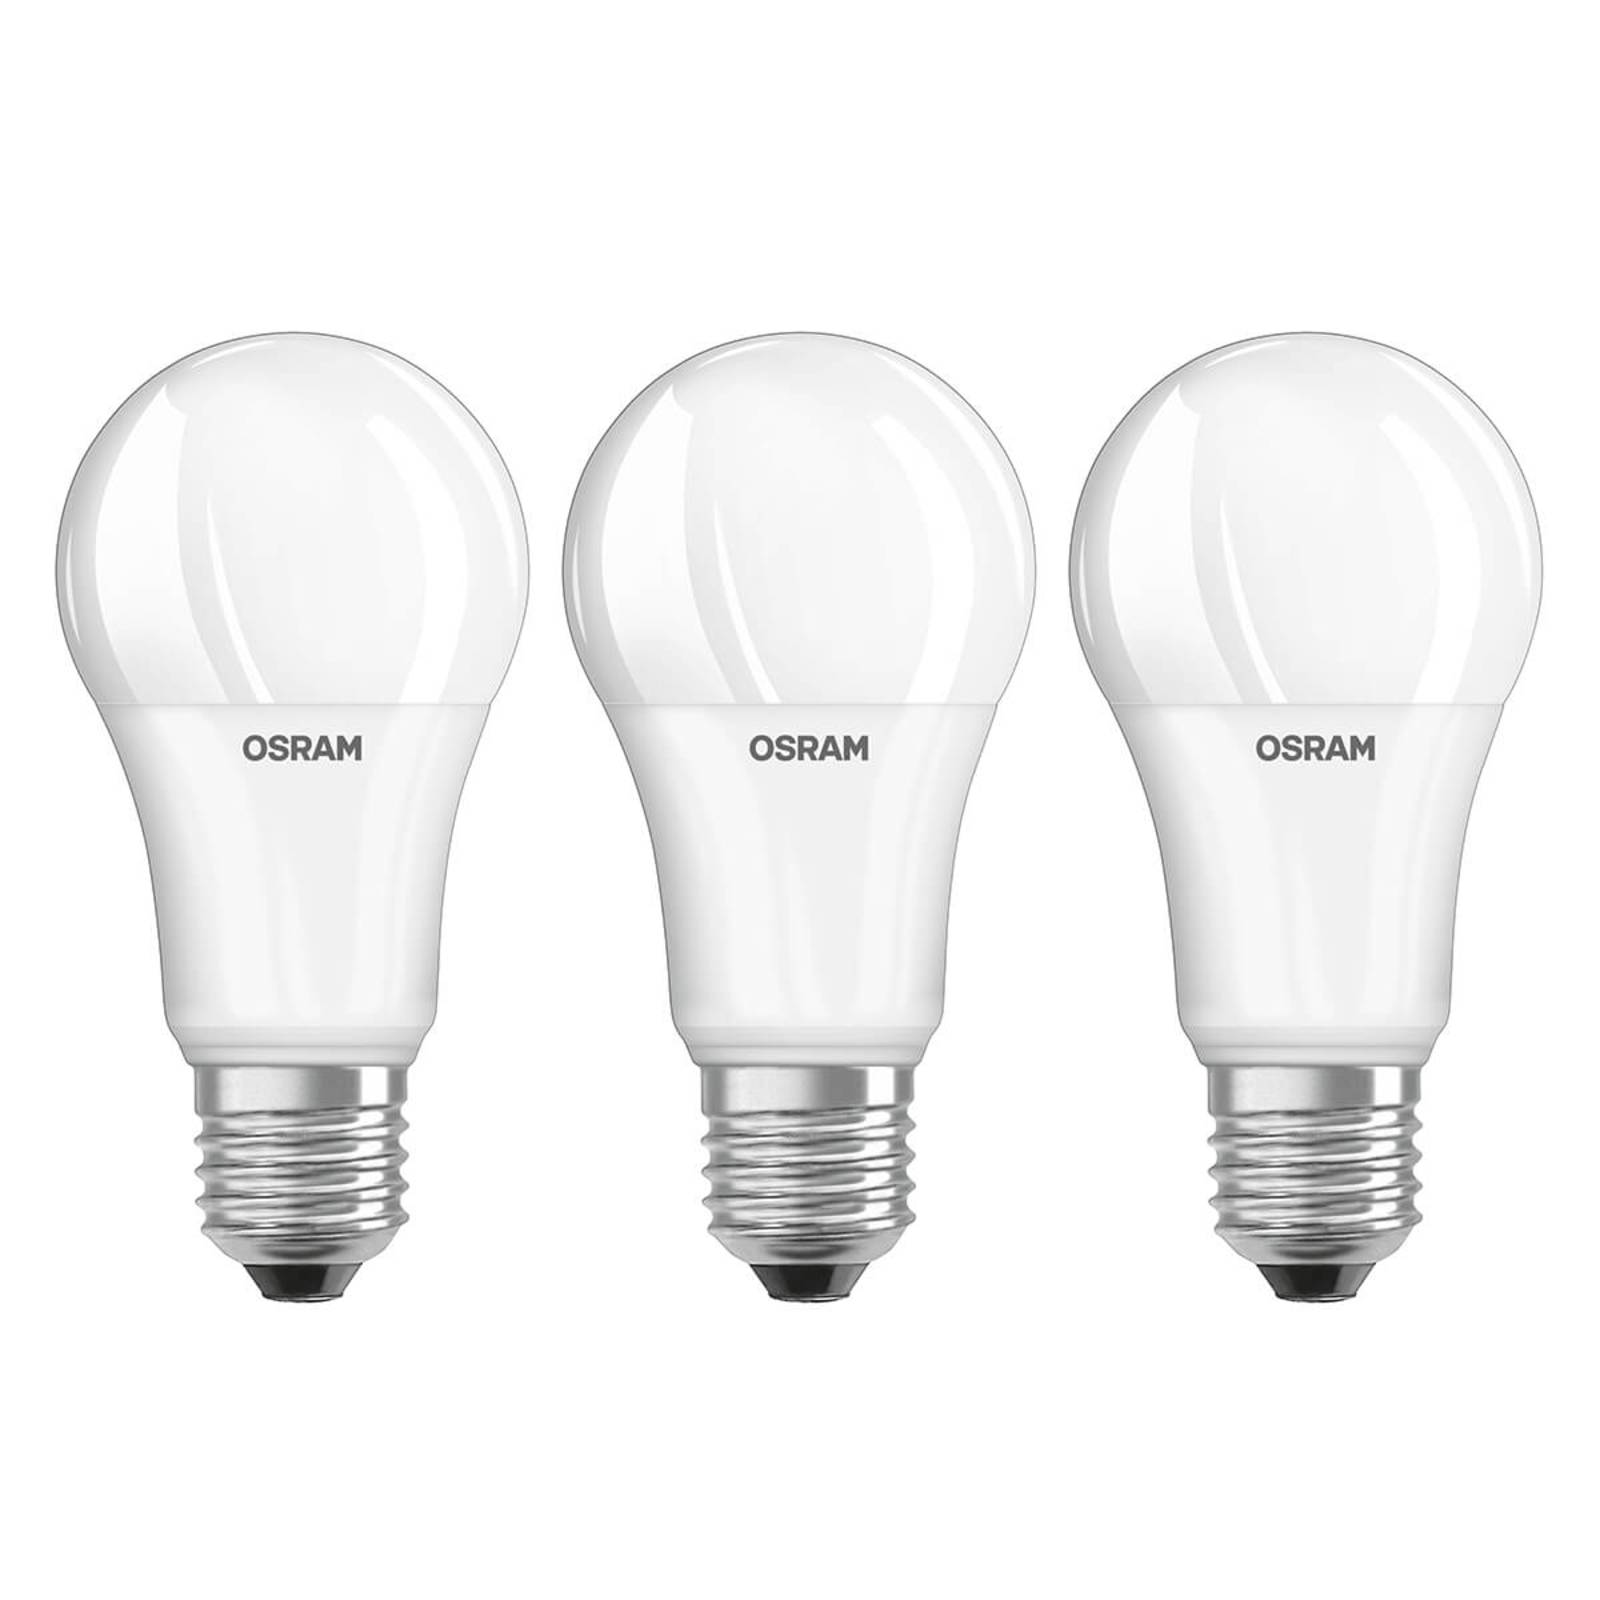 Osram LED-Lampe E27 13W, universalweiß, 3er-Set